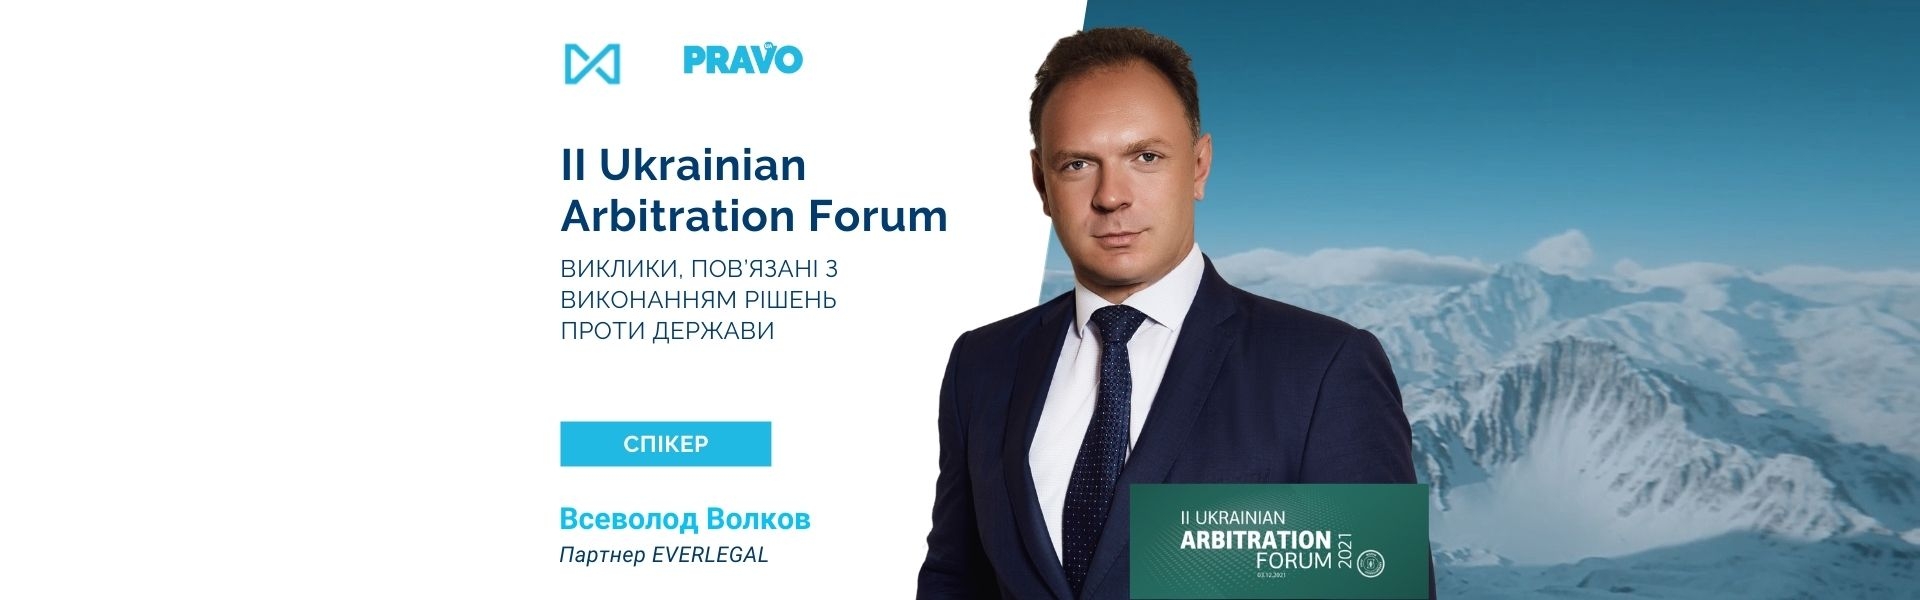 II Ukrainian Arbitration Forum